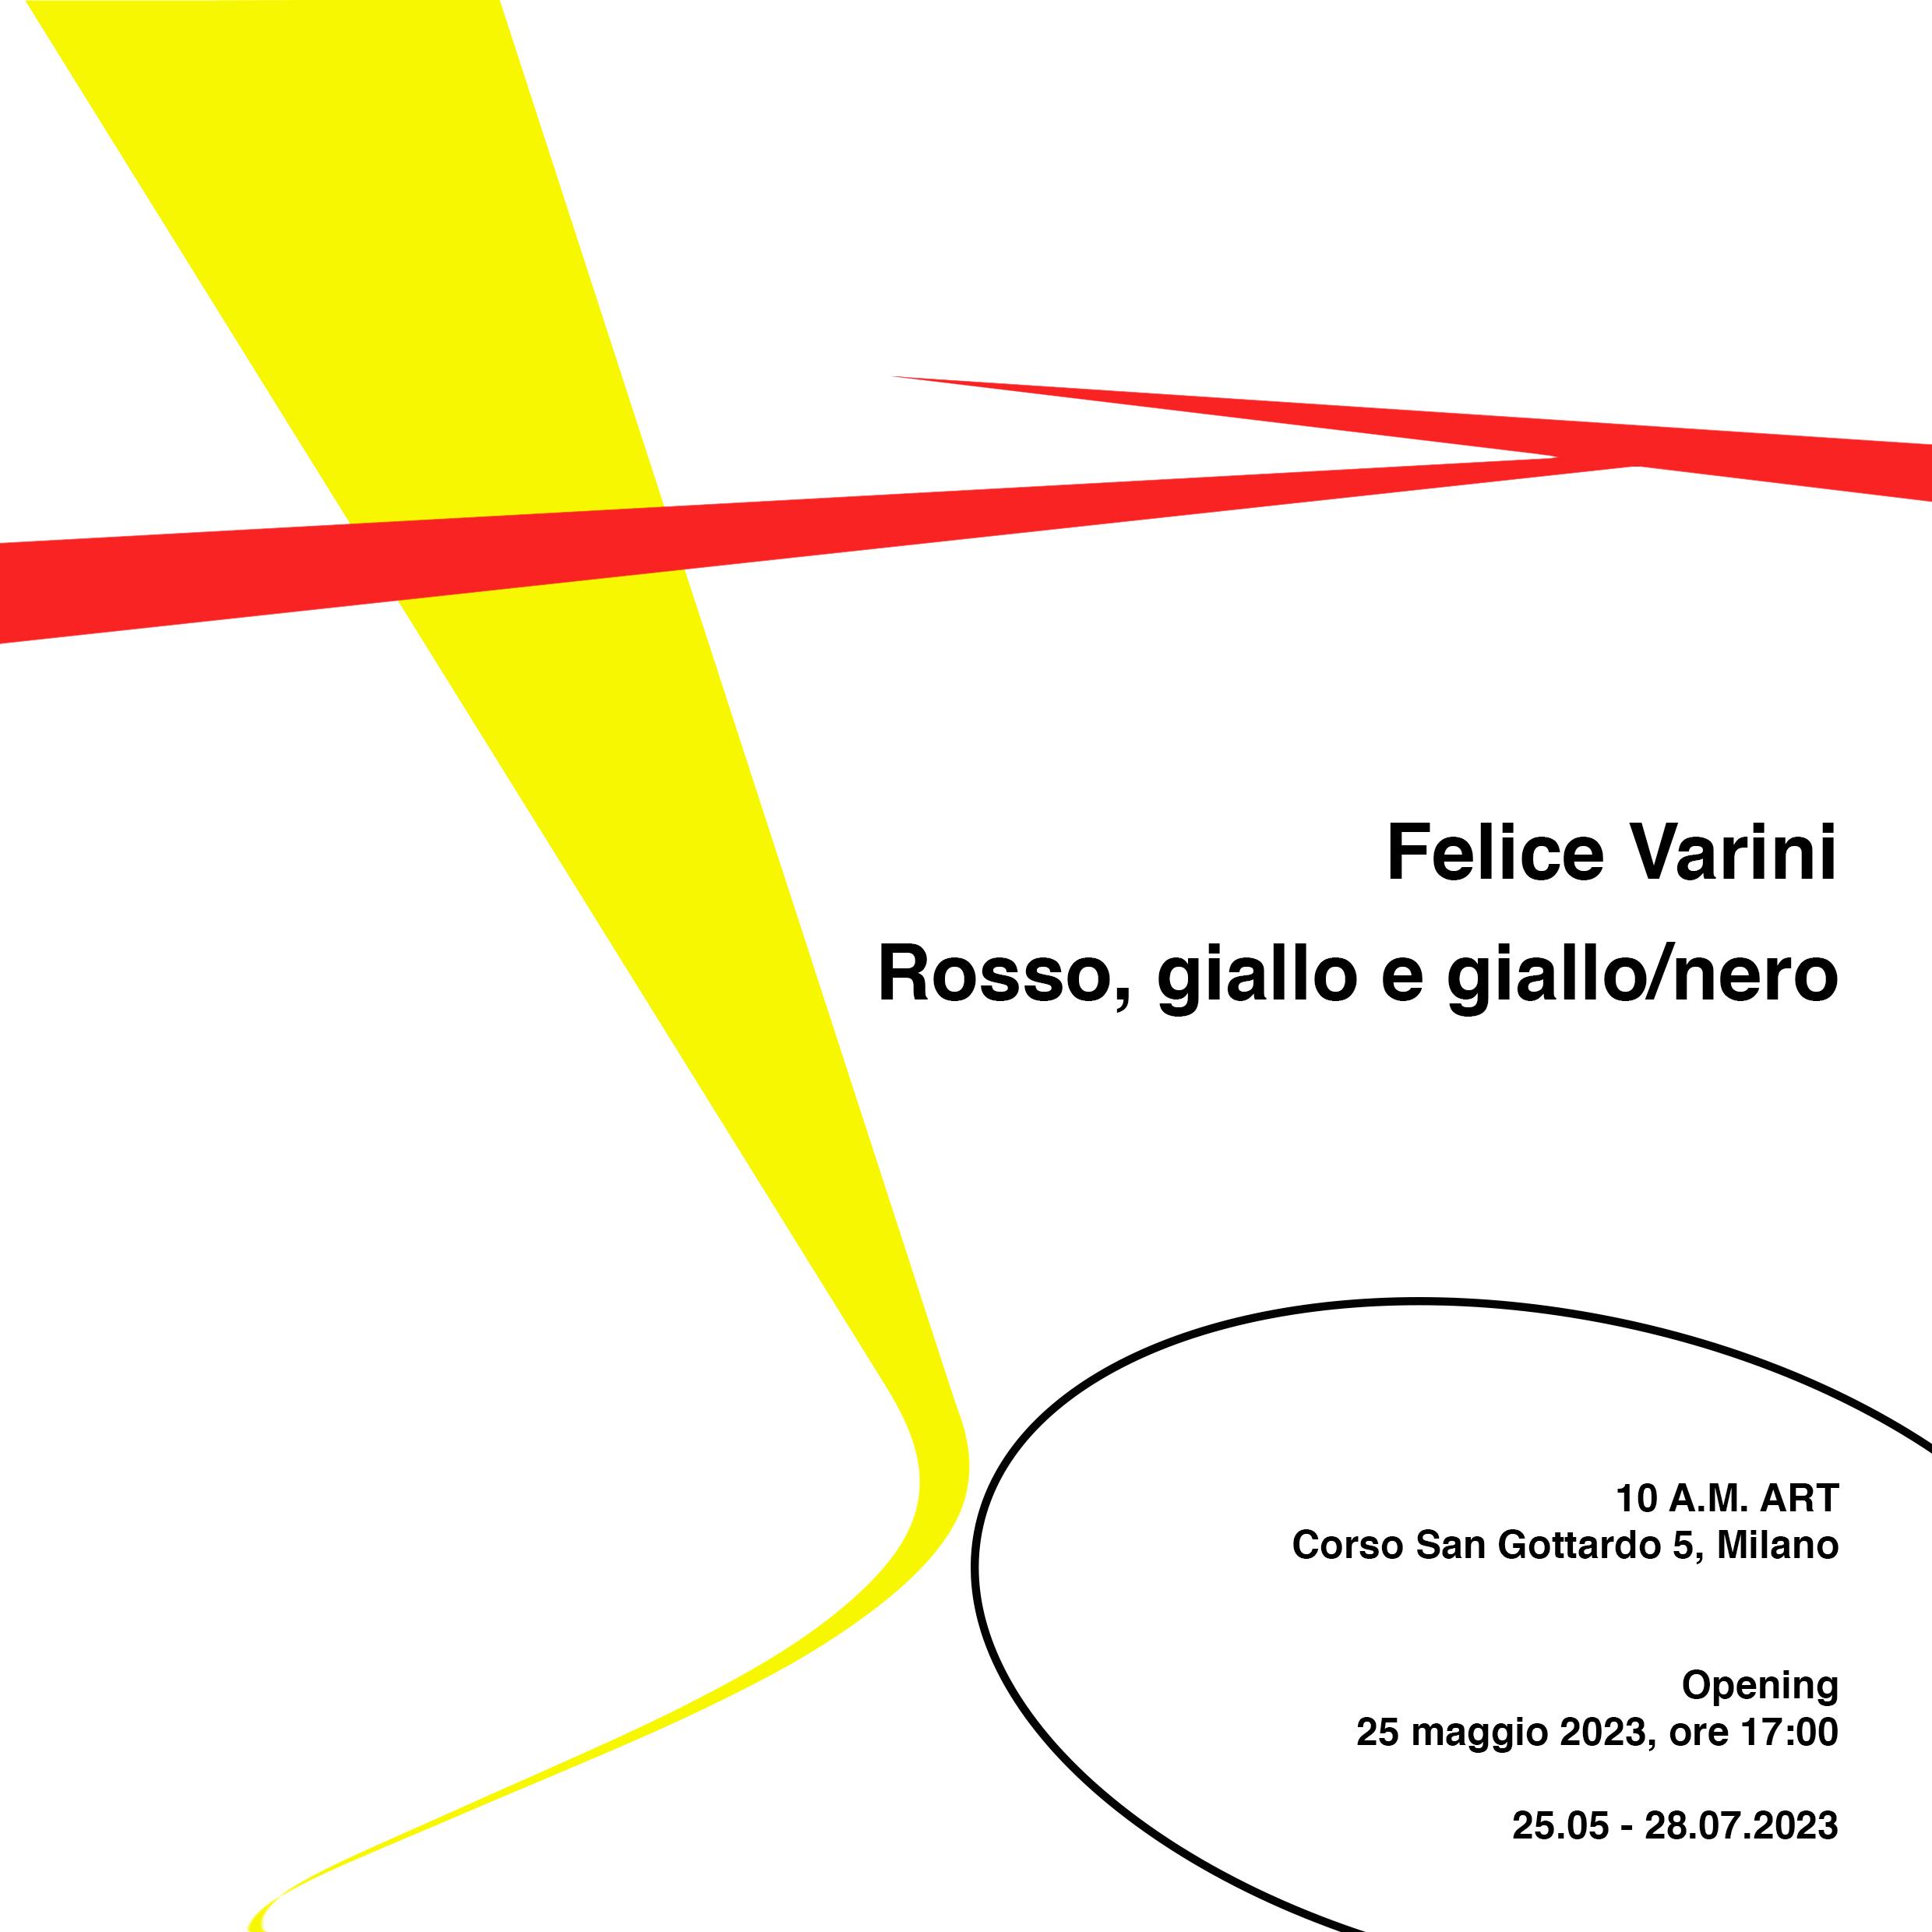 Felice Varini. Rosso, giallo e giallo/nero